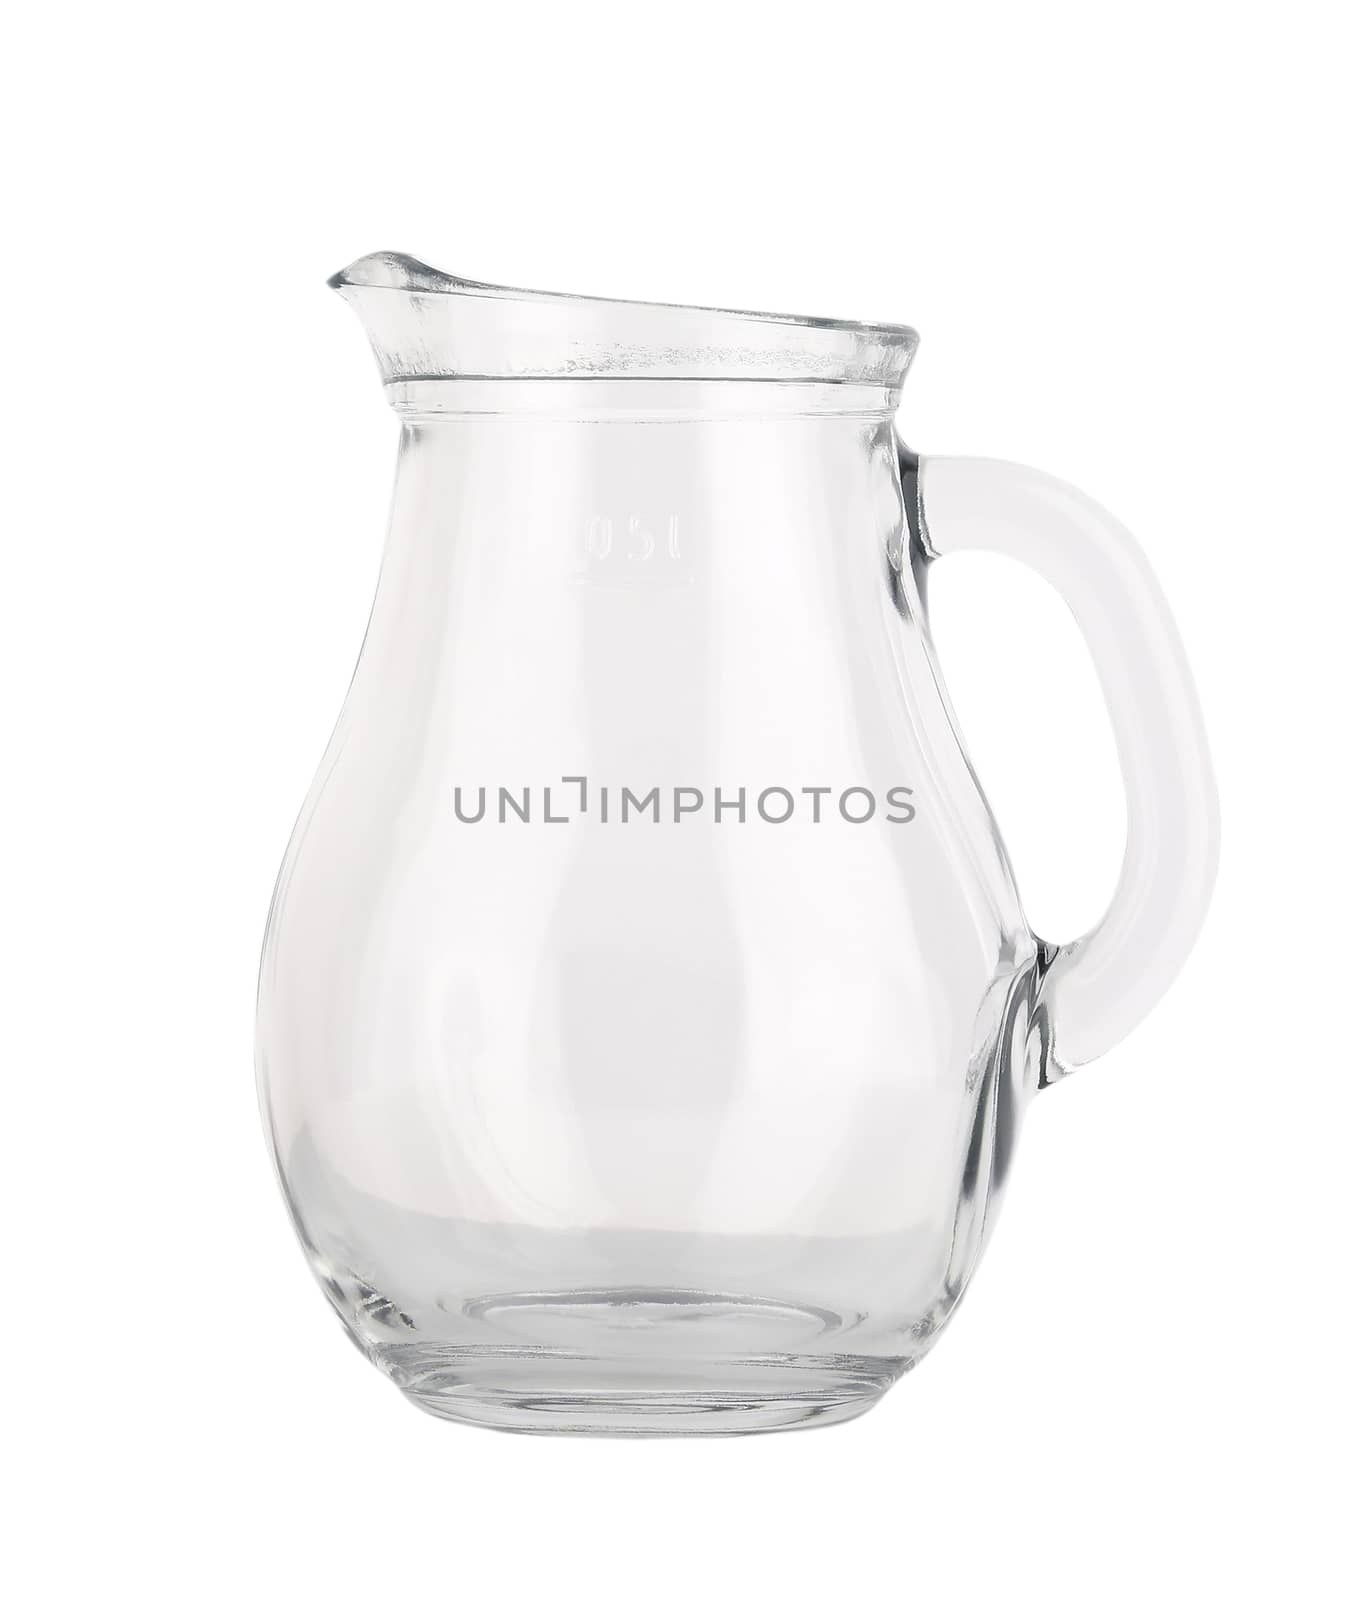 empty glass jug by Digifoodstock